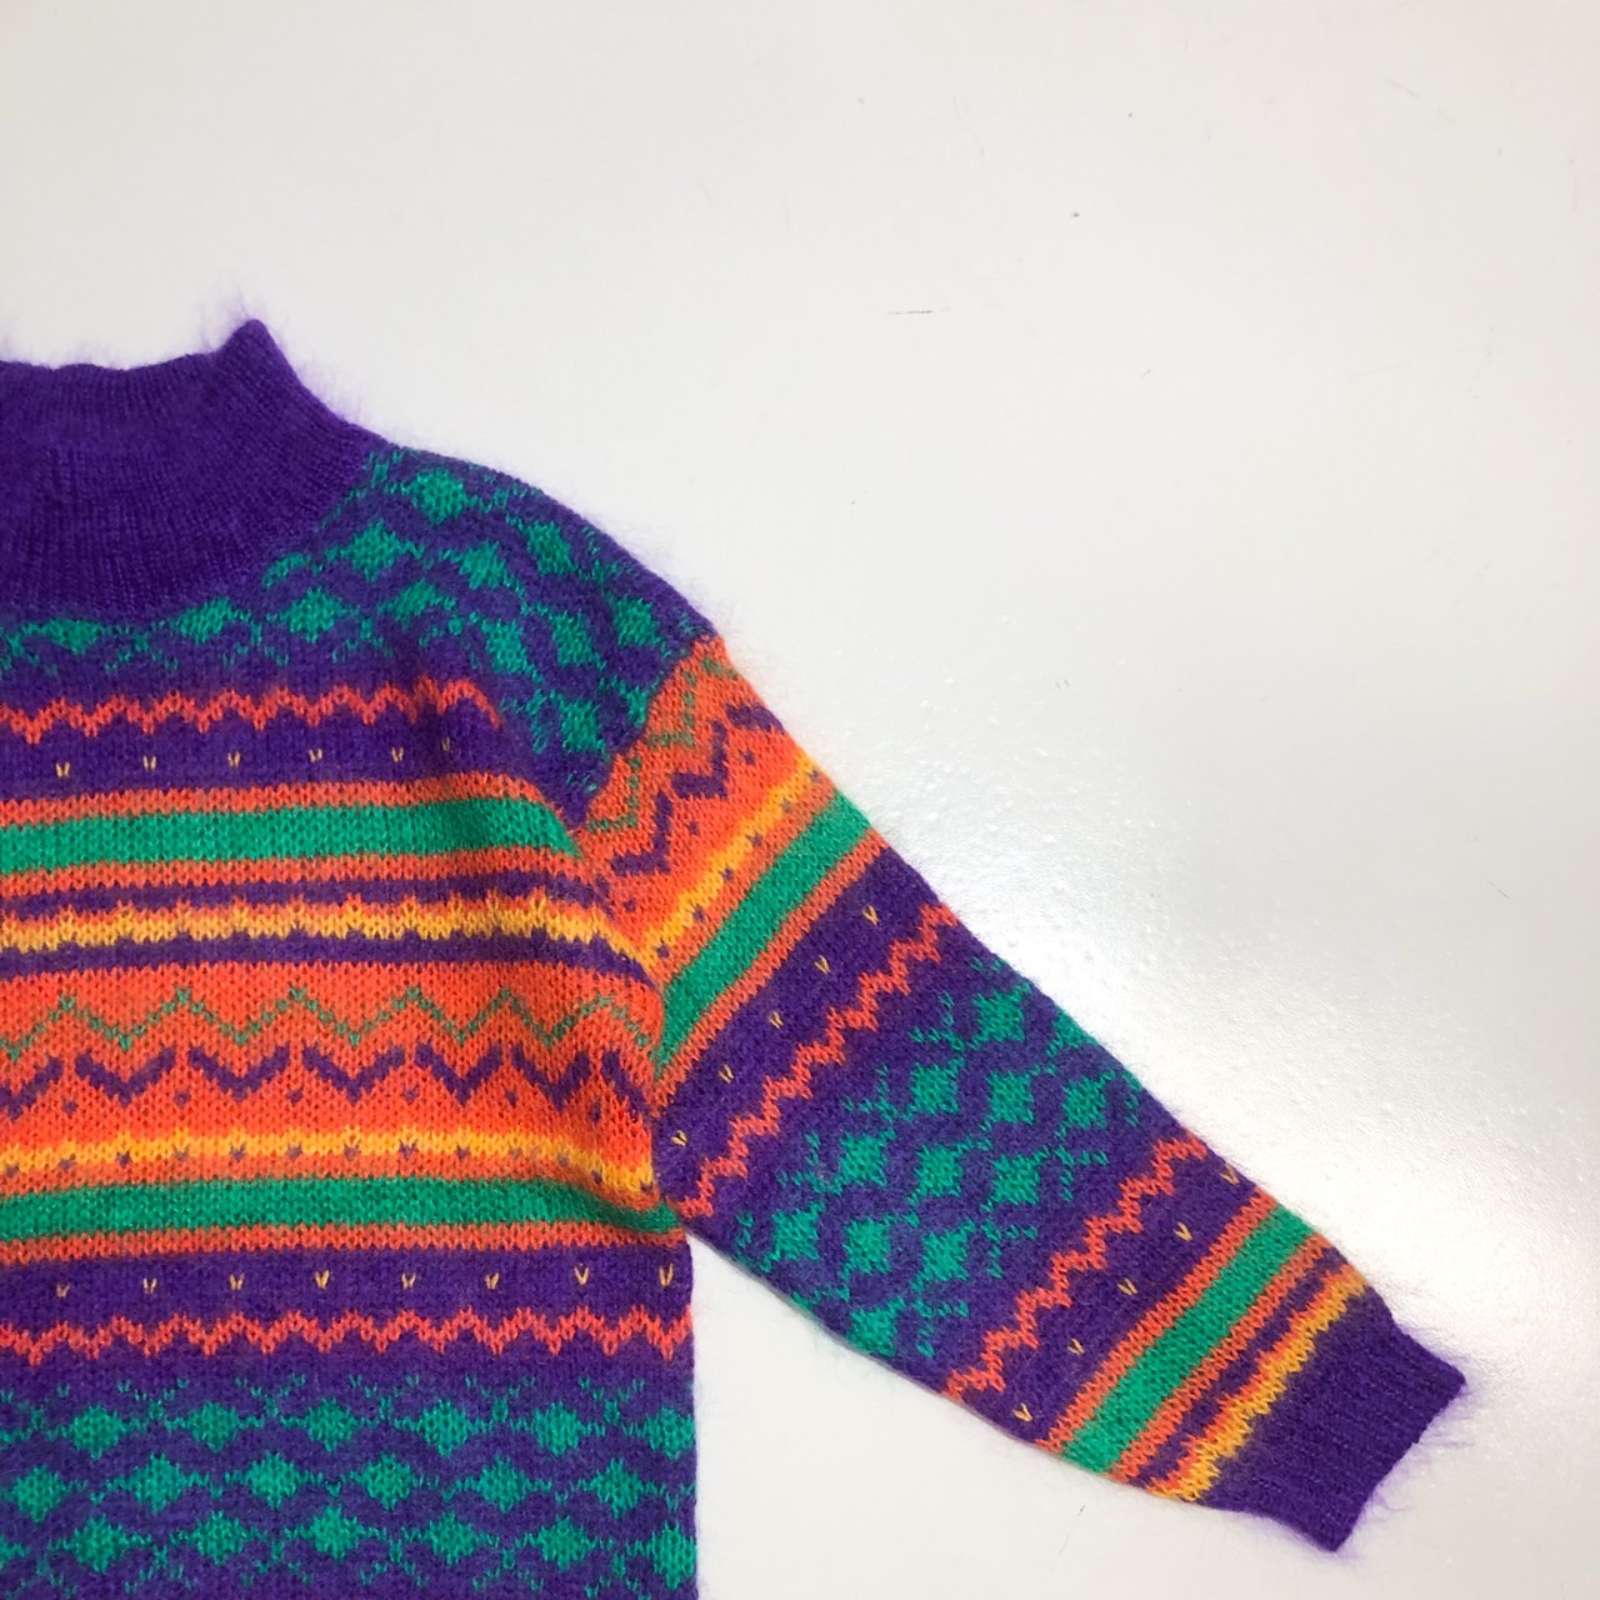 COACH®: Mohair Sweater